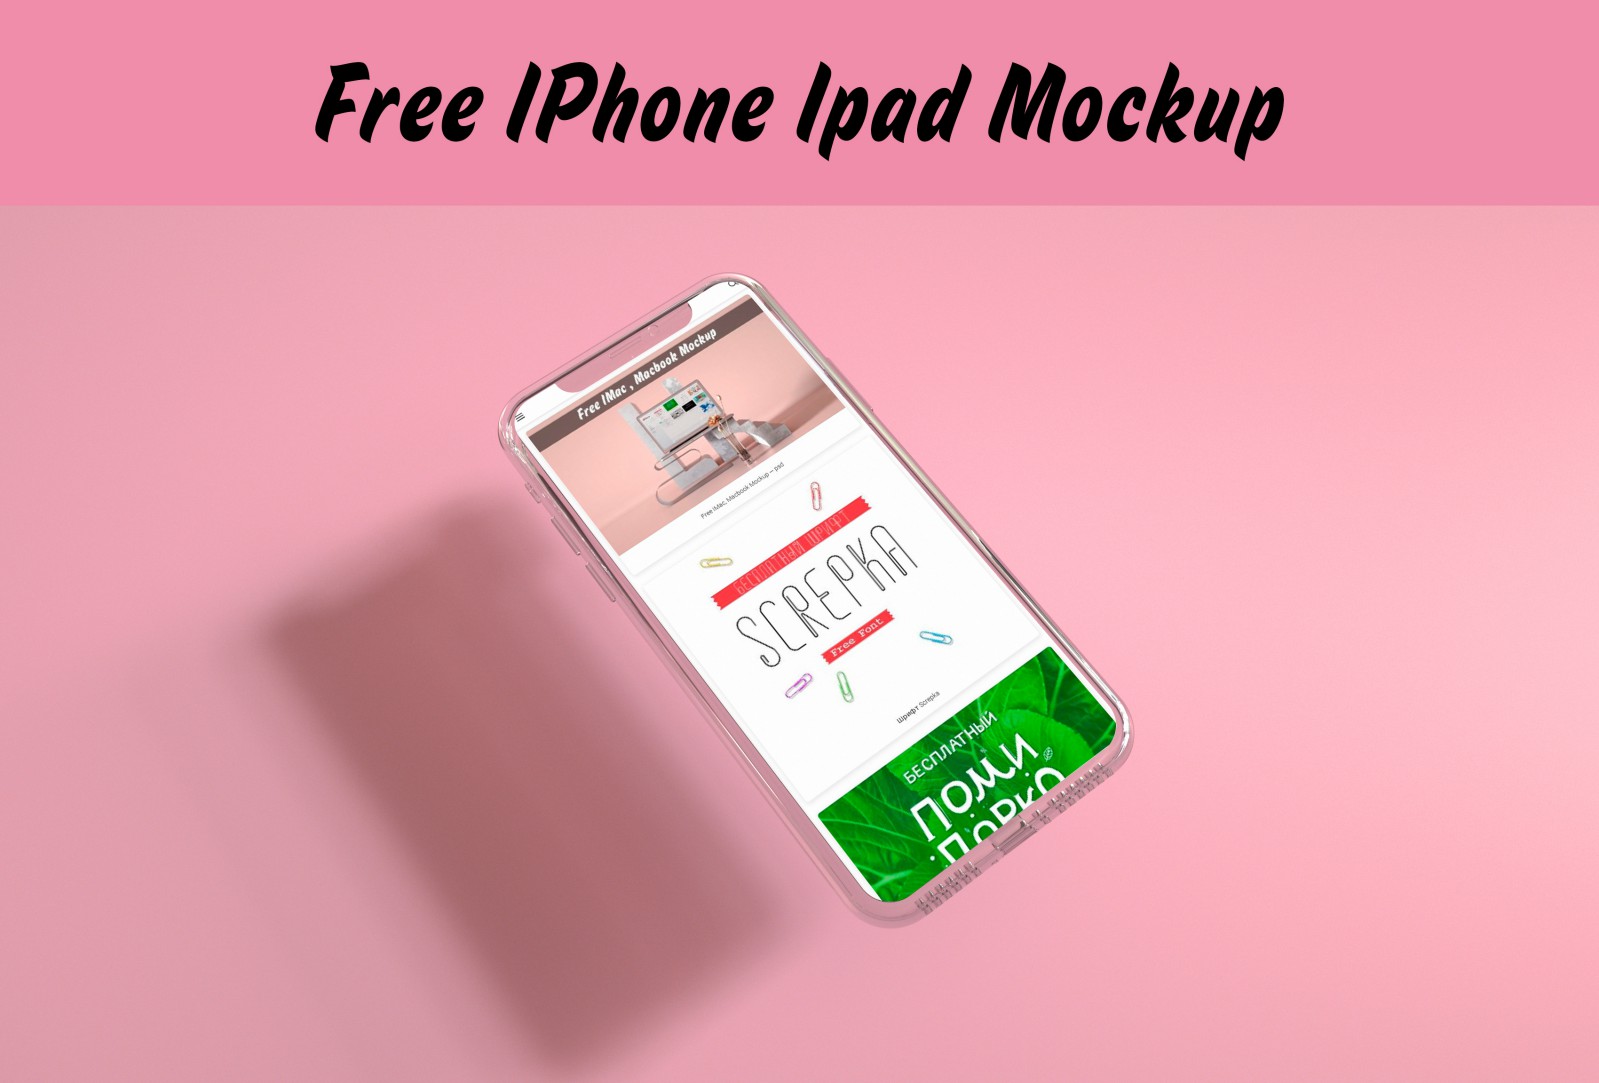 Free Ipad IPhone Mockup psd скачать бесплатно